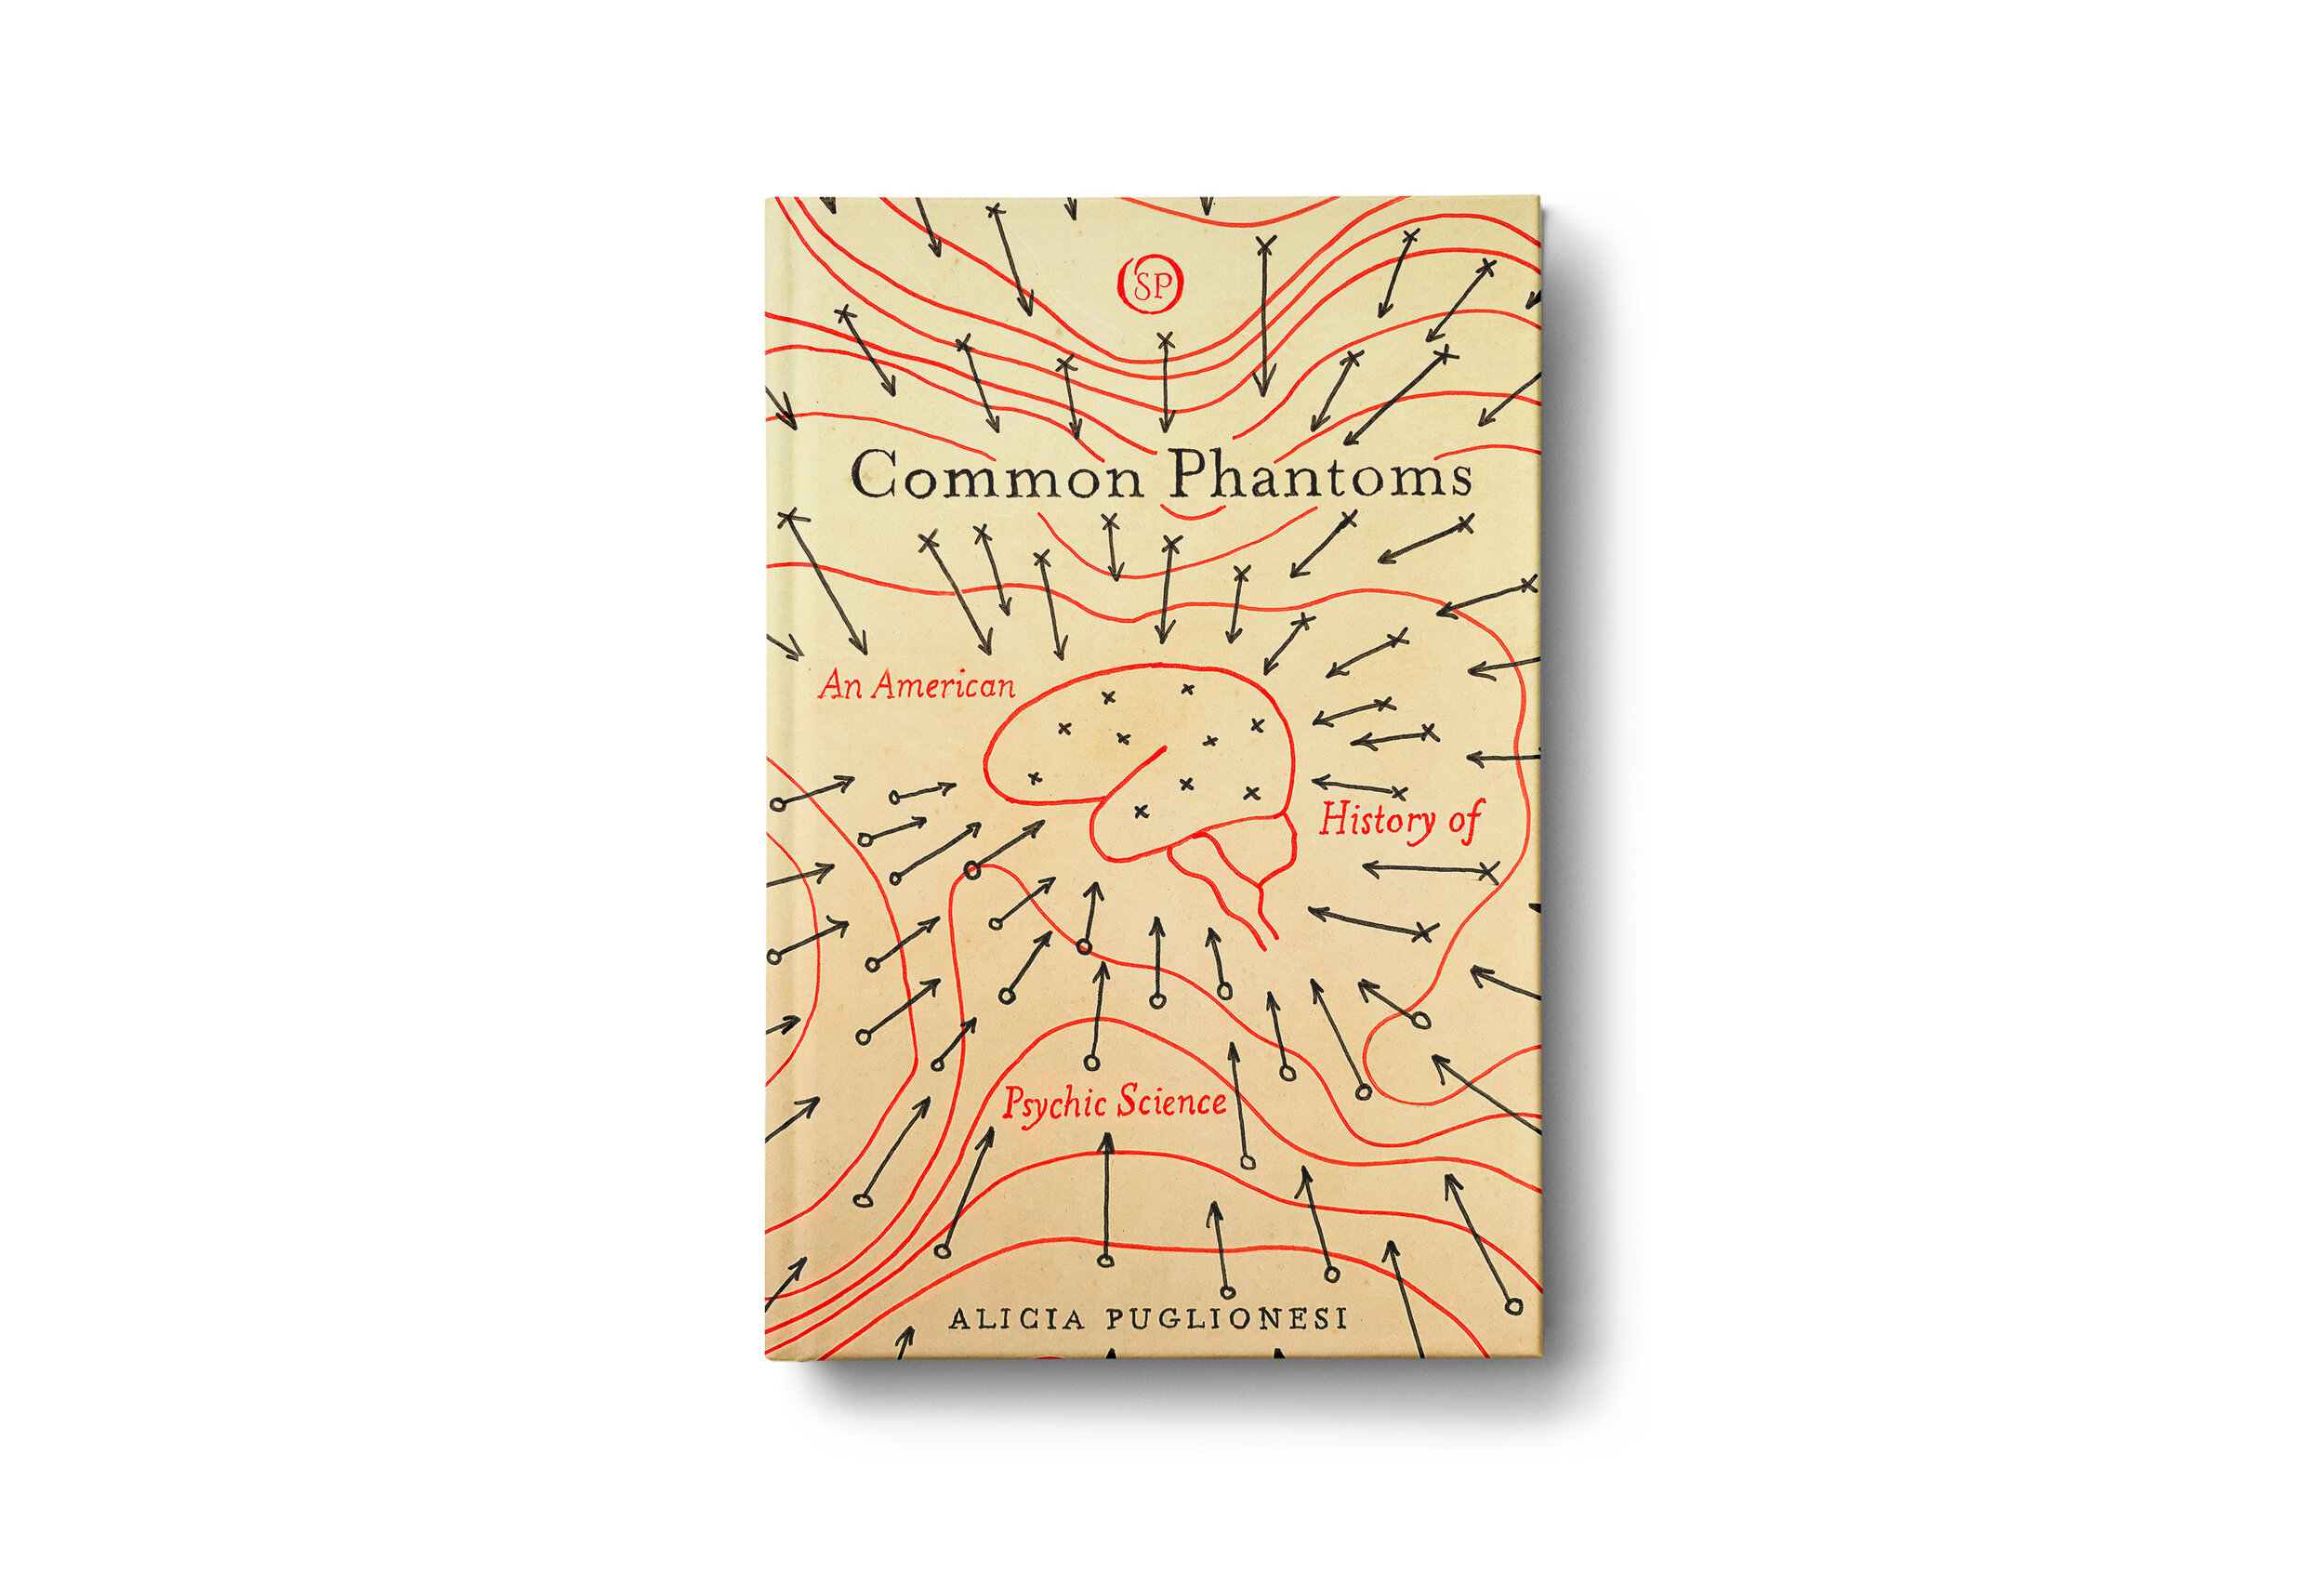 Common Phantoms, by Alicia Puglionesi (Stanford, 2020)